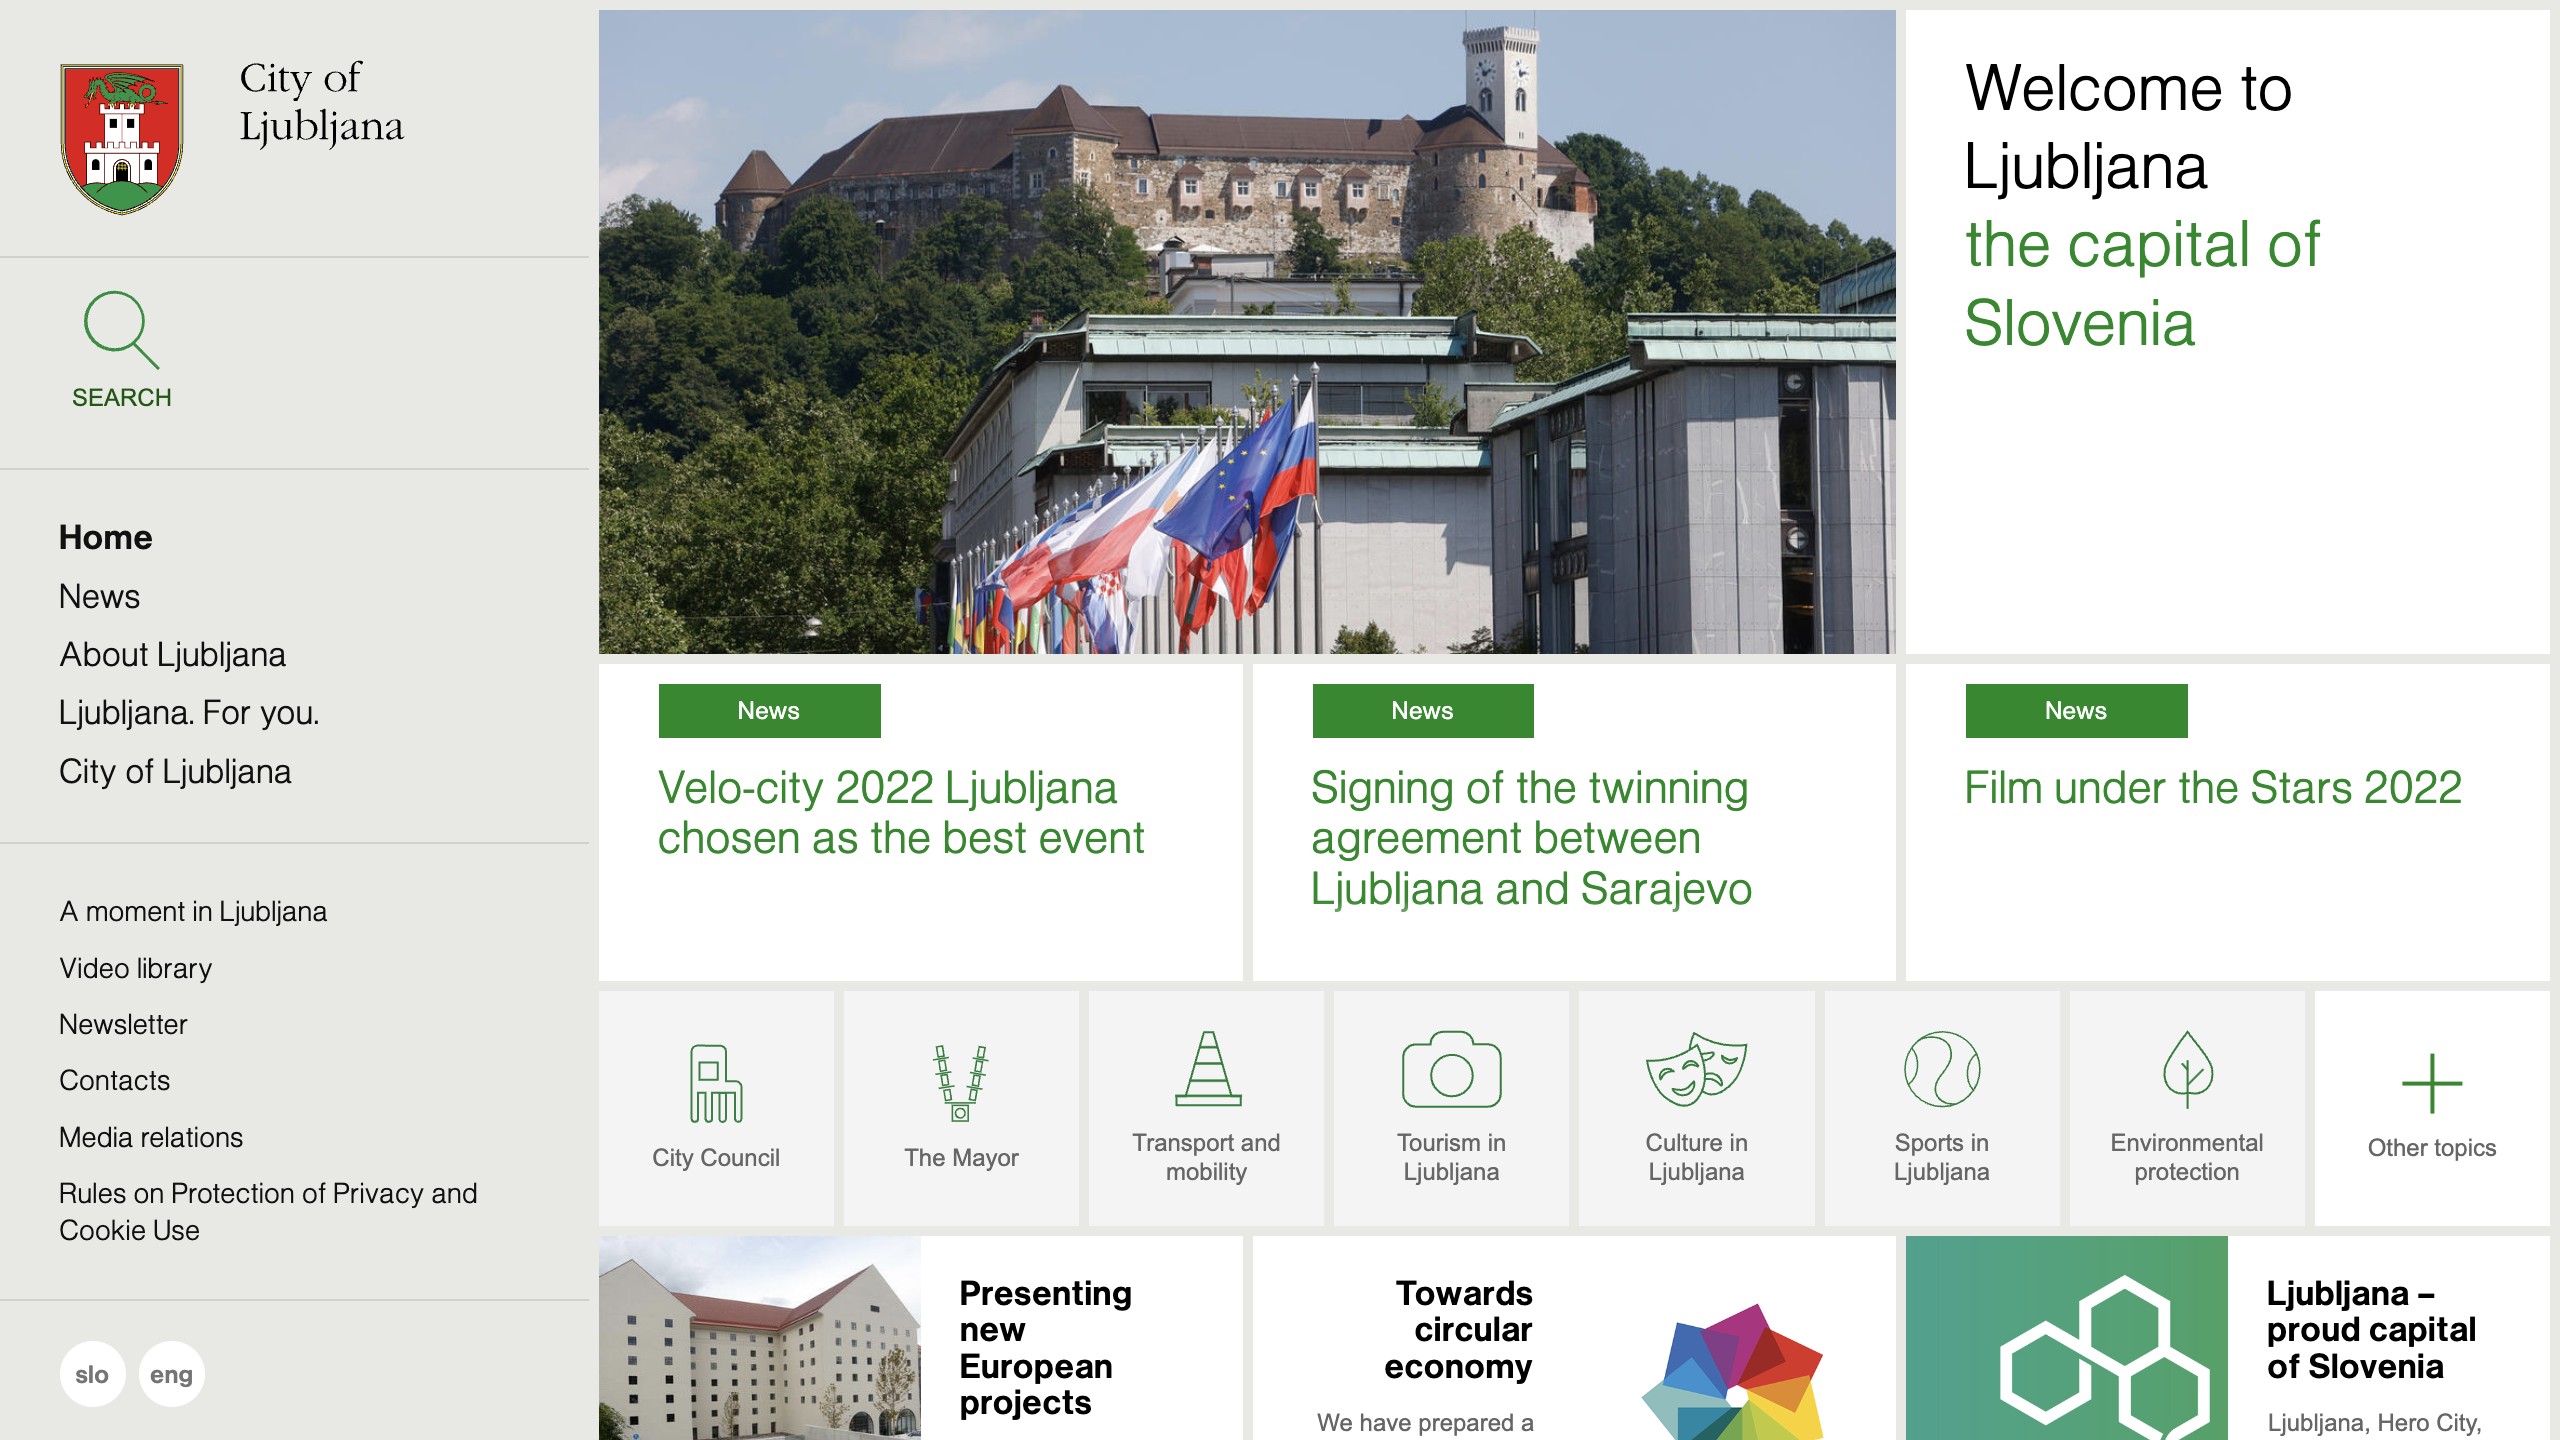 Monicipality of Ljubljana (Innovatif)